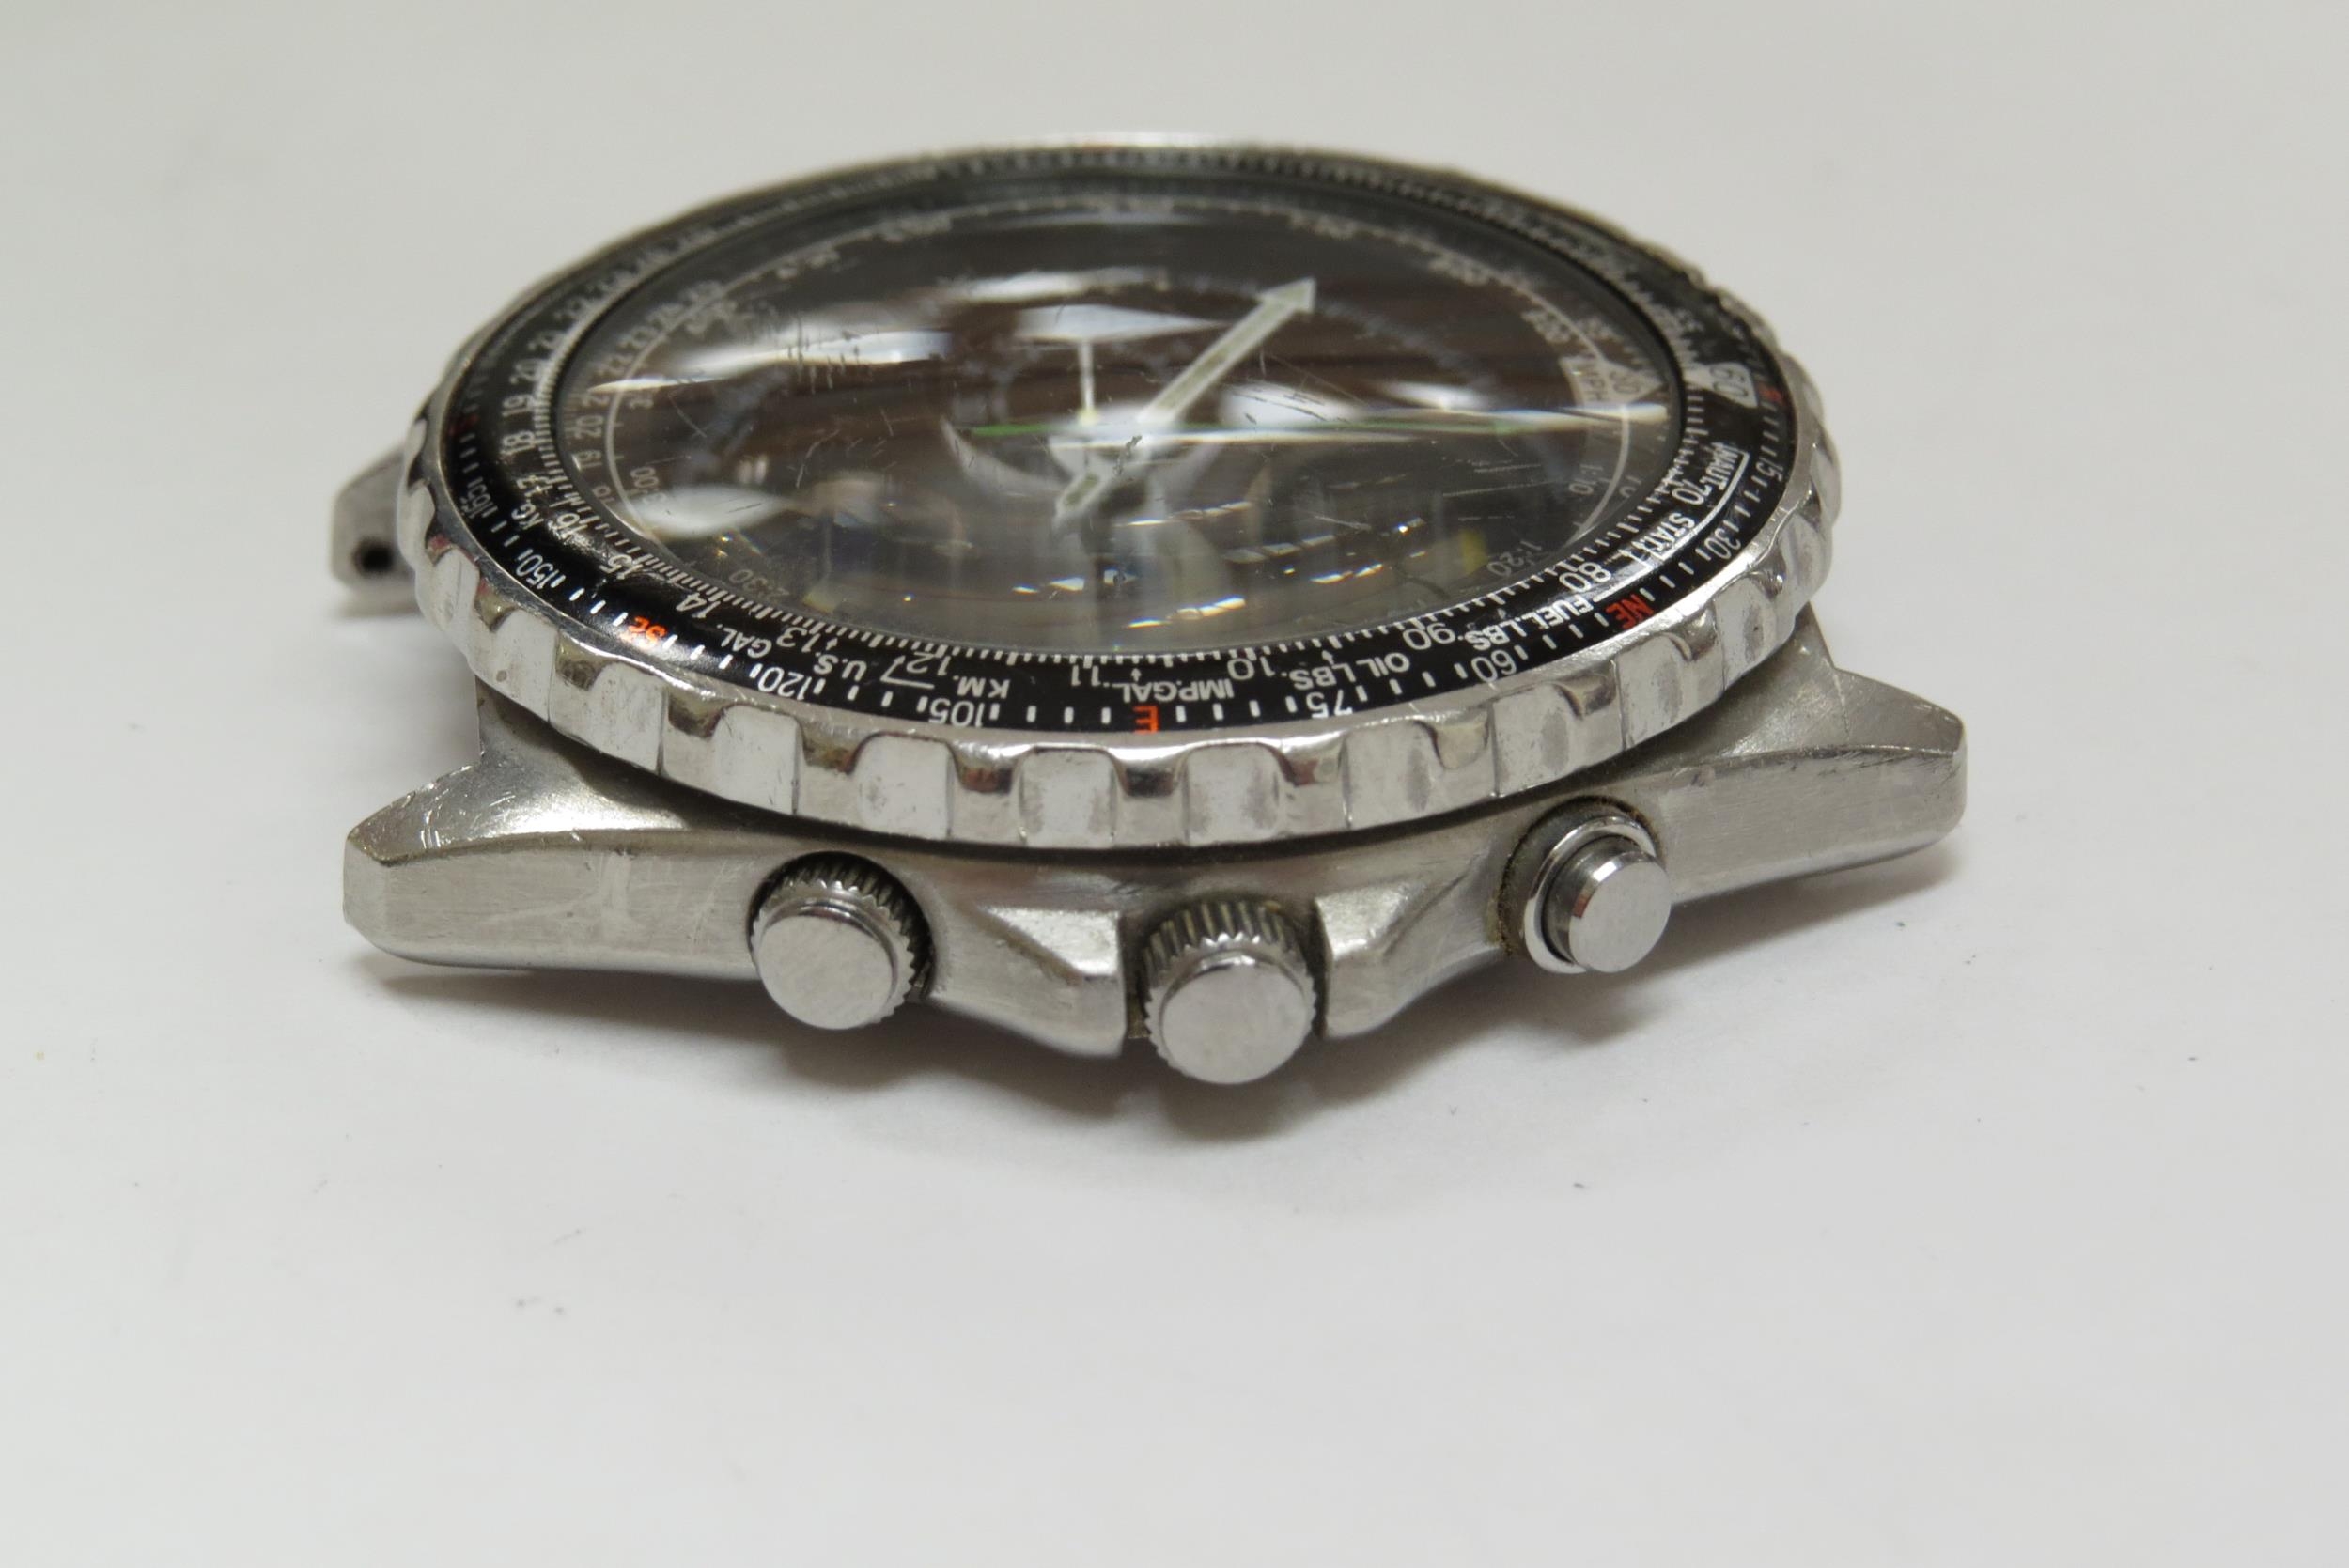 A Seiko Sports chronograph wristwatch, no strap - Image 3 of 7